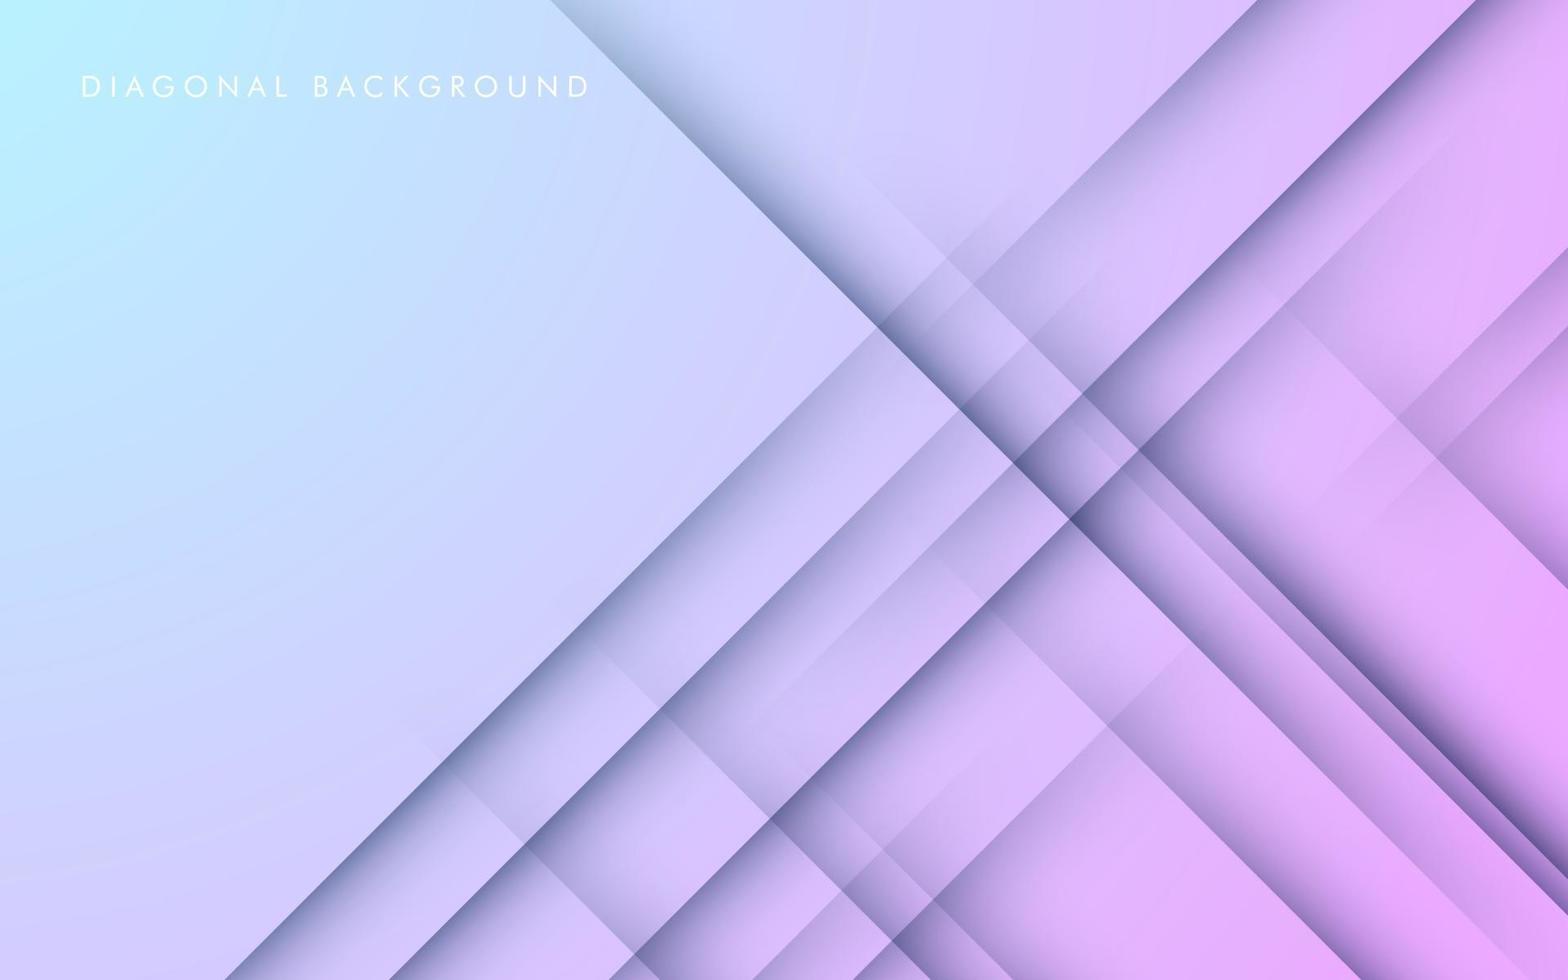 raya diagonal de degradado suave púrpura moderno abstracto con sombra y luz background.eps10 vector